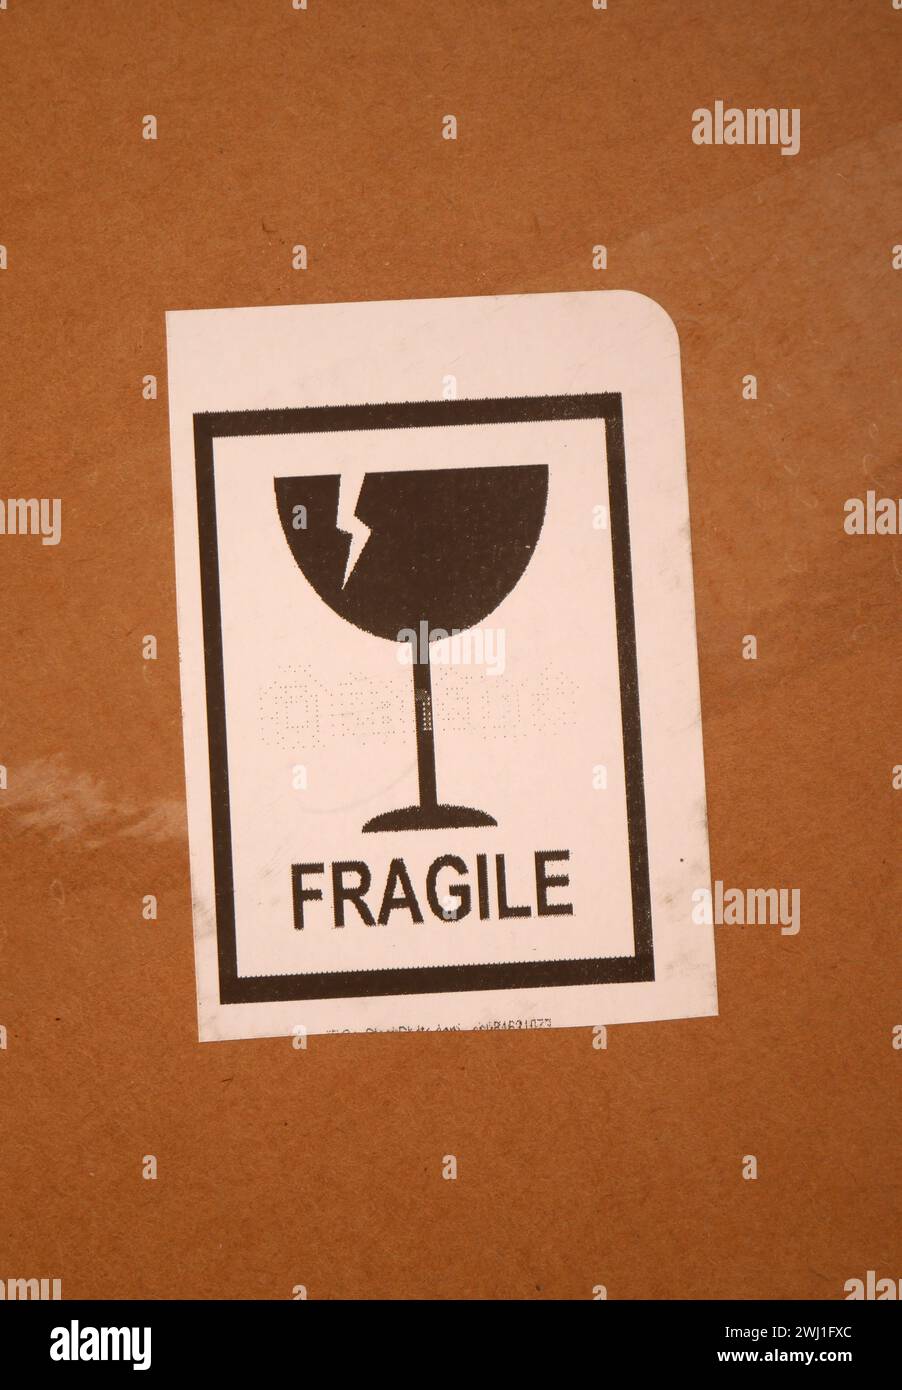 Fragile sticker on a cardboard box Stock Photo